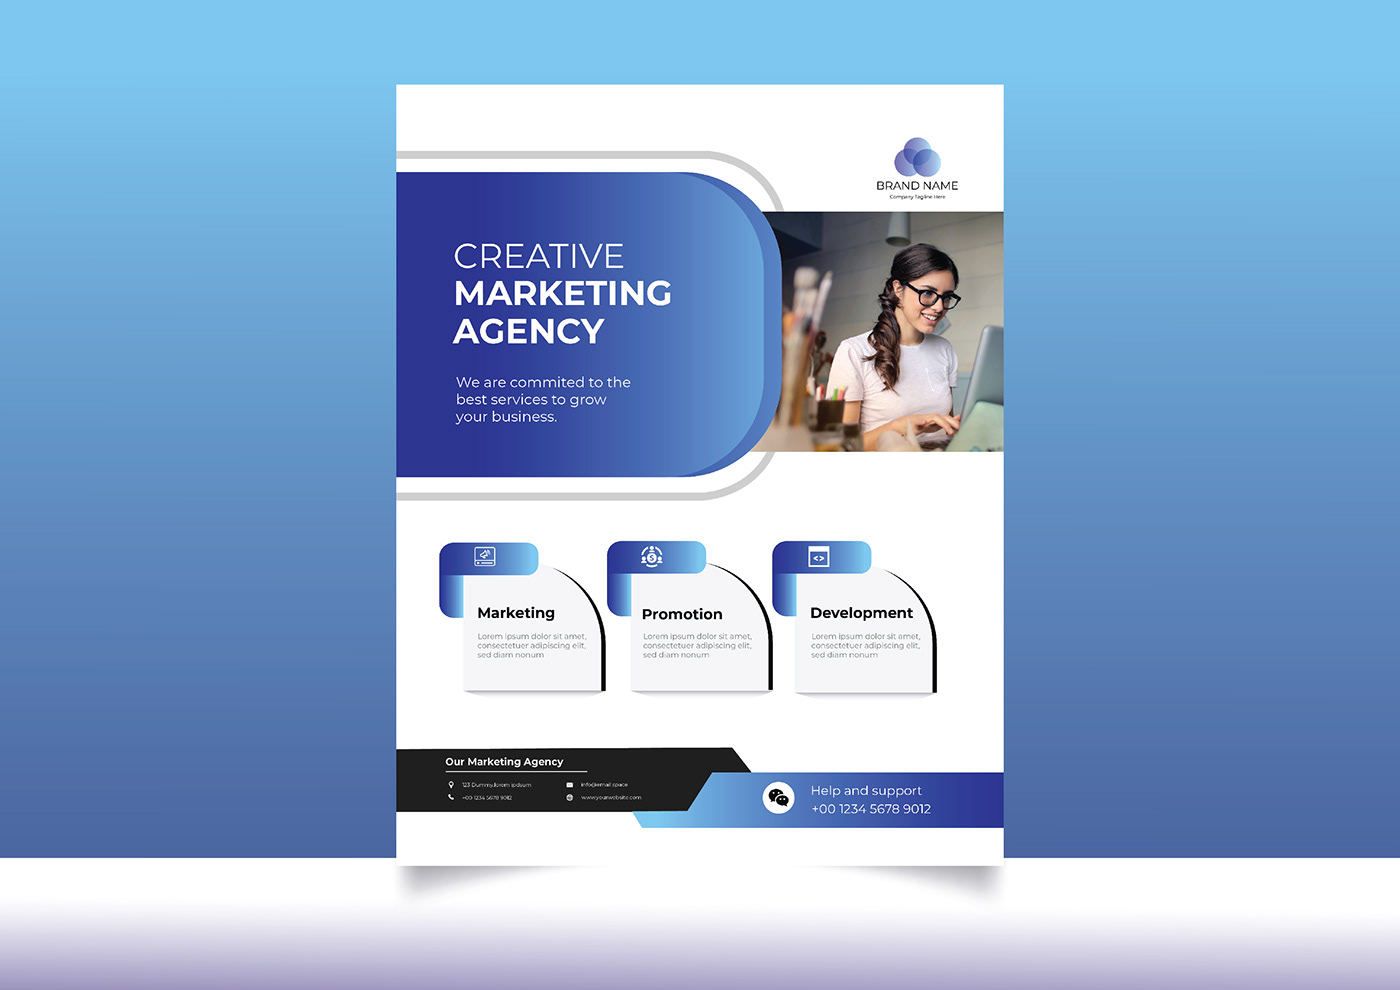 Flyer Design for creative marketing agency
